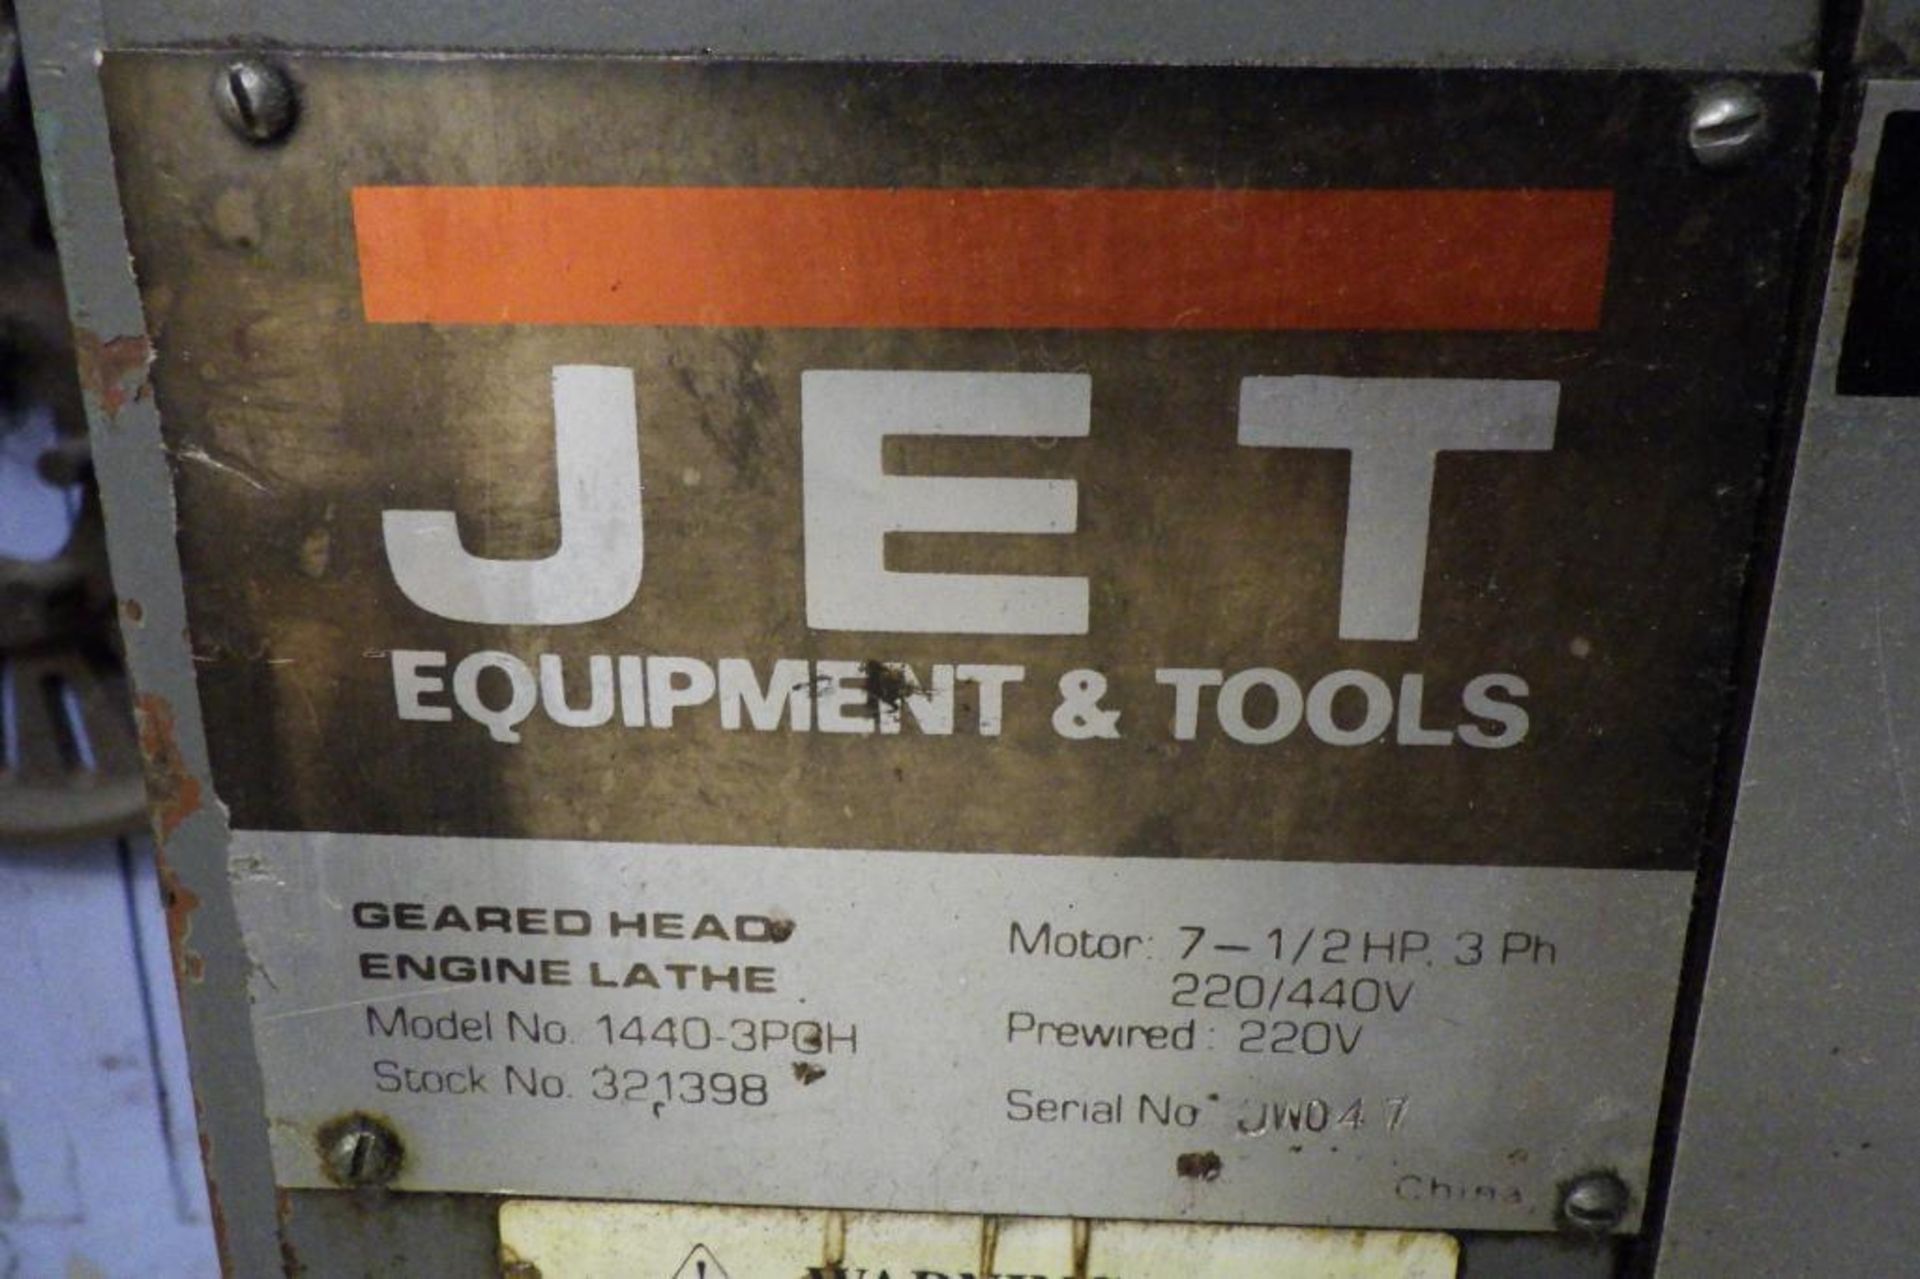 Jet geared head engine lathe - Image 6 of 6